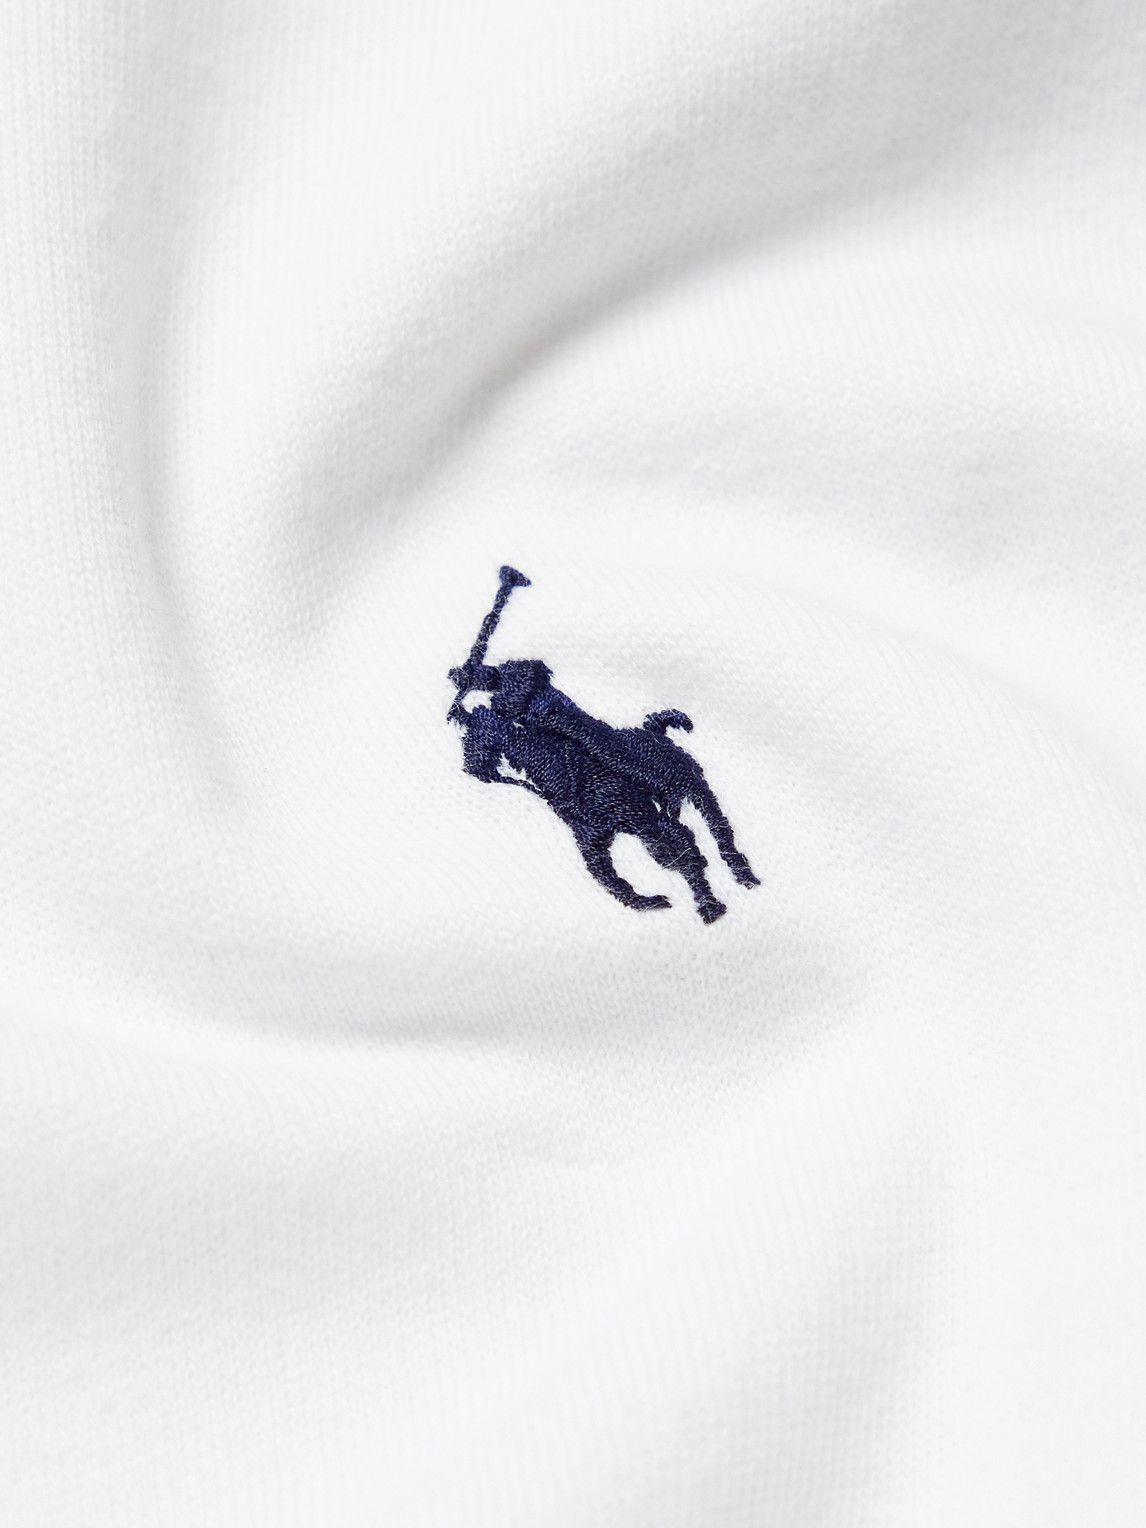 Polo Ralph Lauren - Wimbledon Logo-Embroidered Cotton-Blend Half-Zip Sweatshirt - White